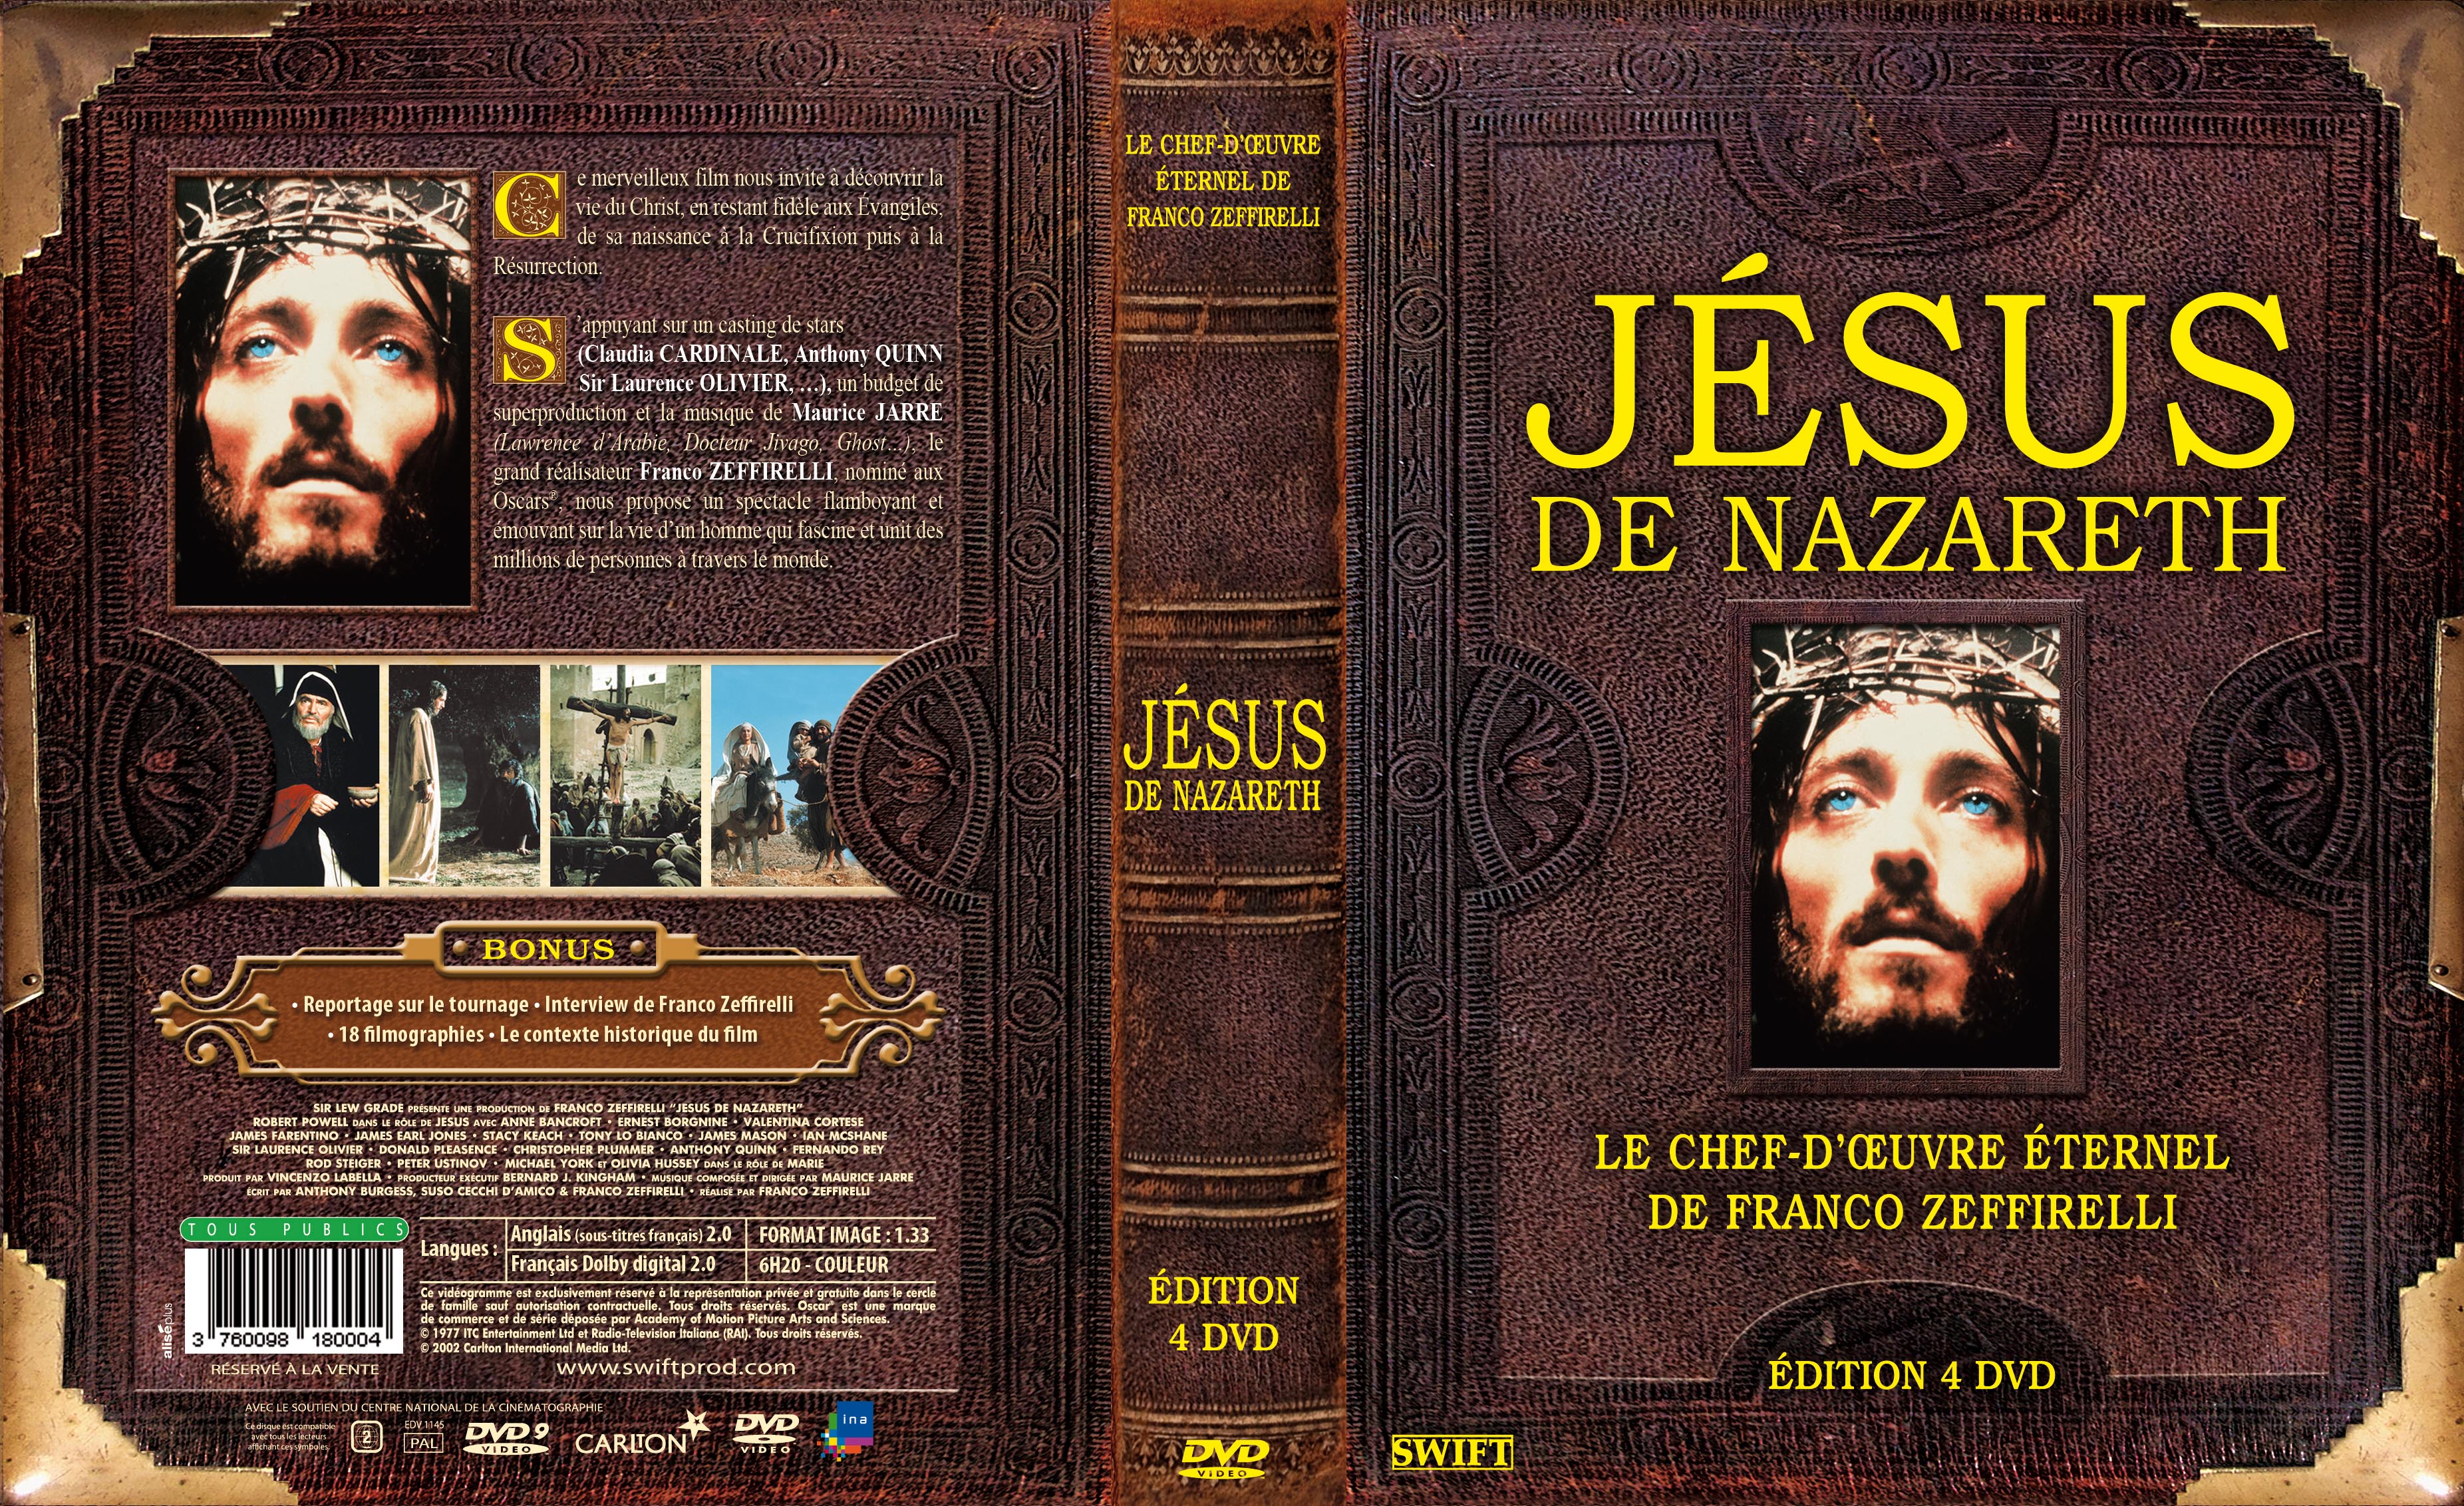 Jaquette DVD Jsus de Nazareth v3